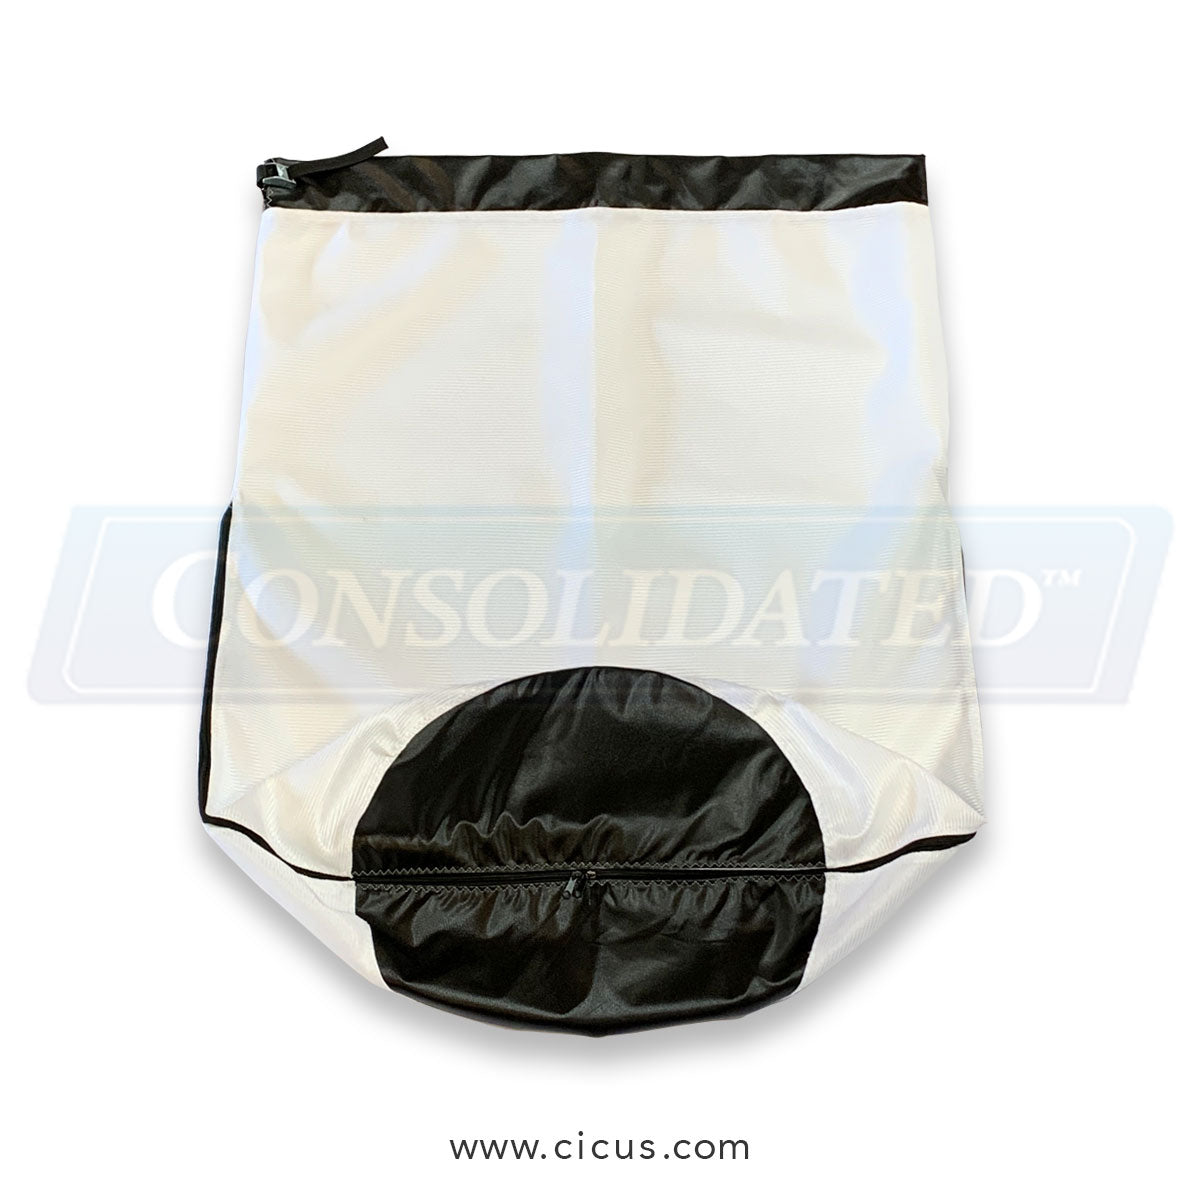 Coronet 40" w x 66" T Lint Bag w/ Wrap Around Zipper [CIC-40X5FTX6BAG-ZIP]